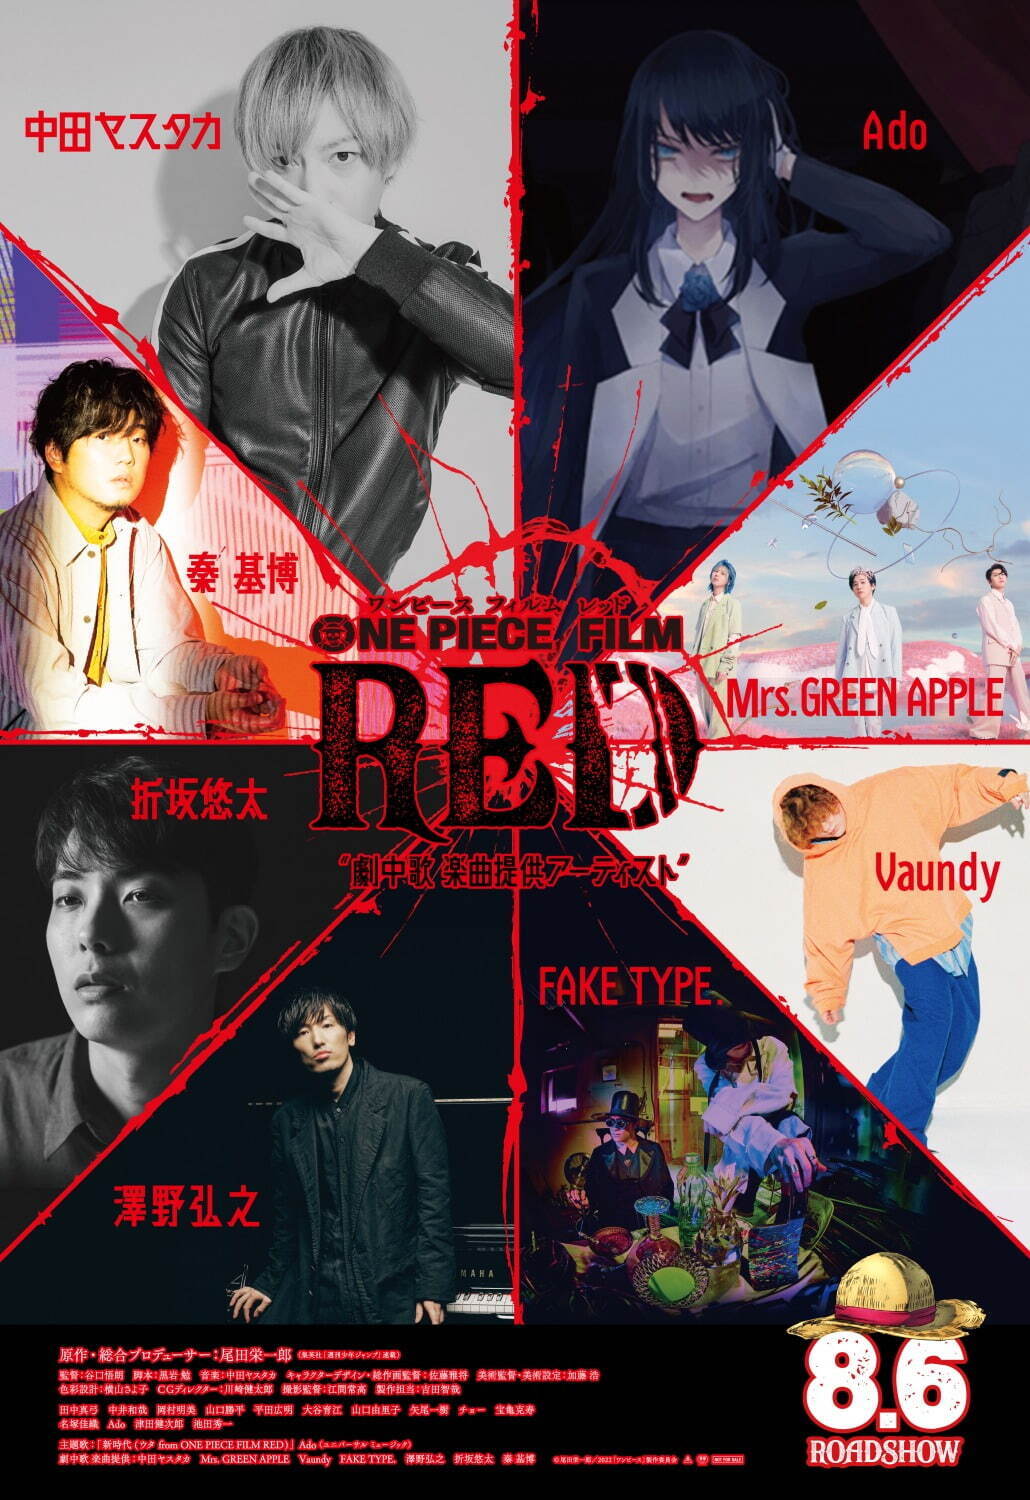 Ado最新アルバム『ウタの歌 ONE PIECE FILM RED』Vaundyやミセスら楽曲提供 - ファッションプレス